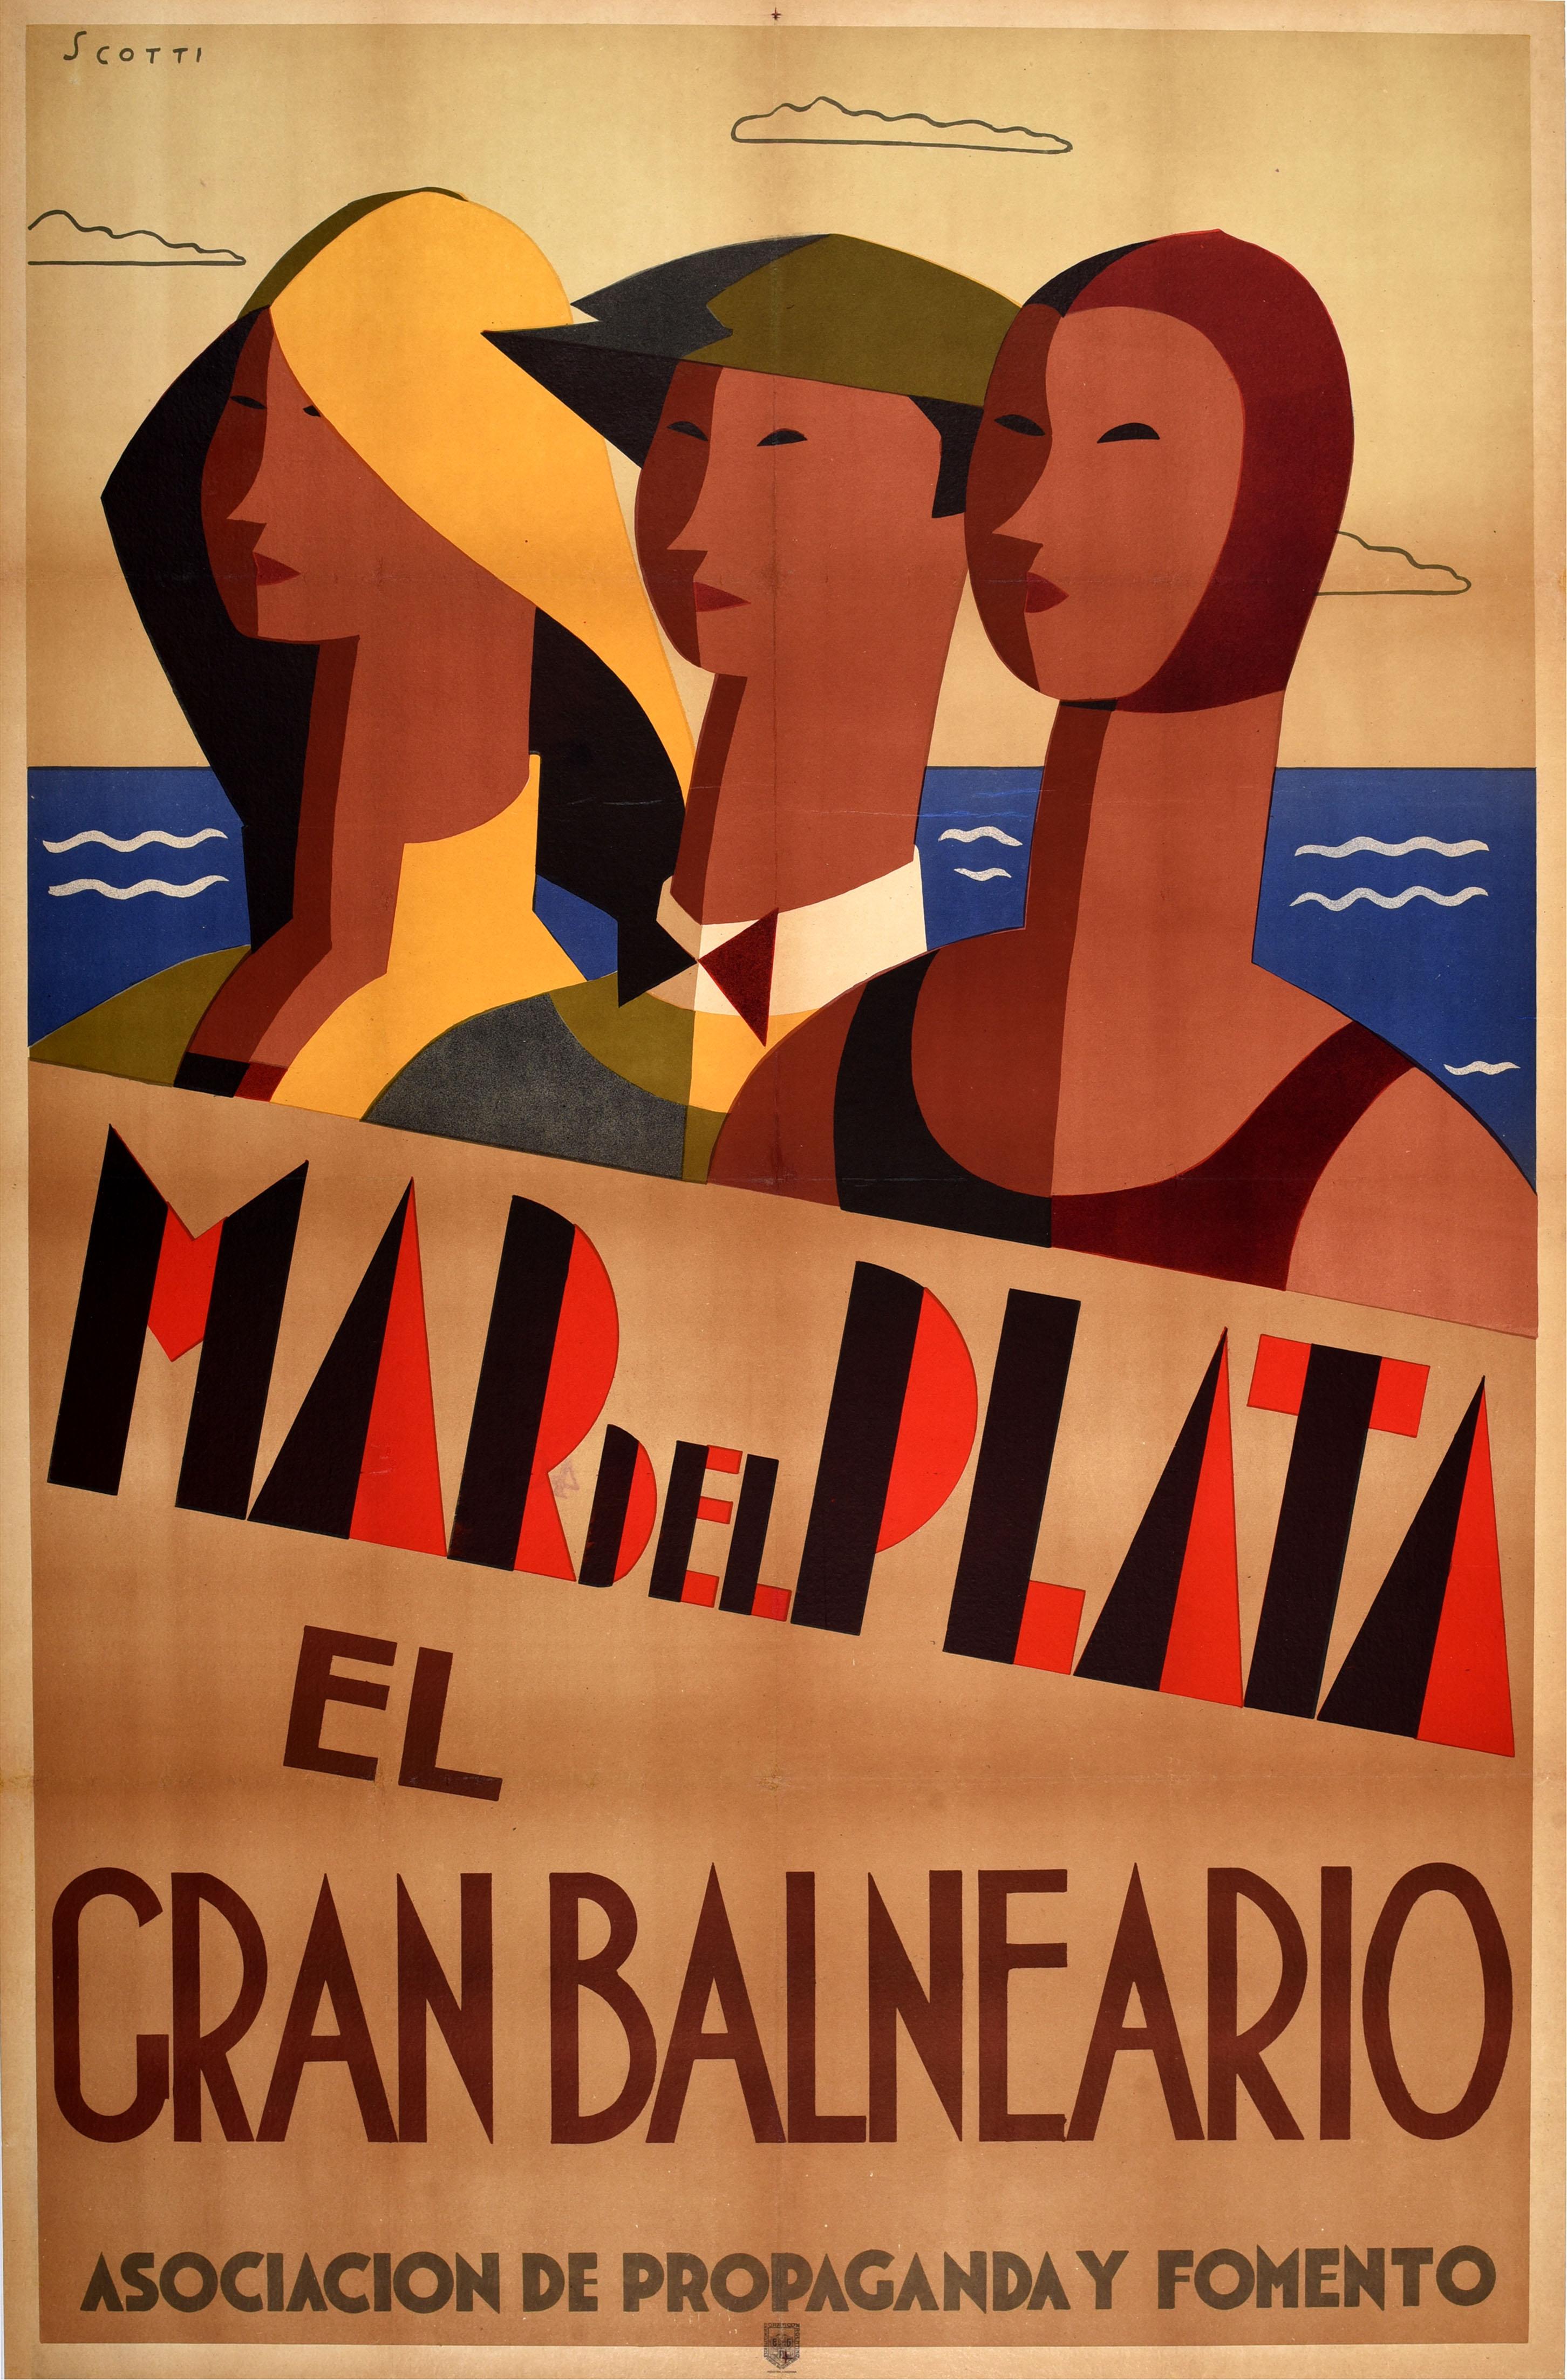 Ernesto Scotti Print - Original Vintage Travel Poster Mar Del Plata Spa Sea Argentina Art Deco Design